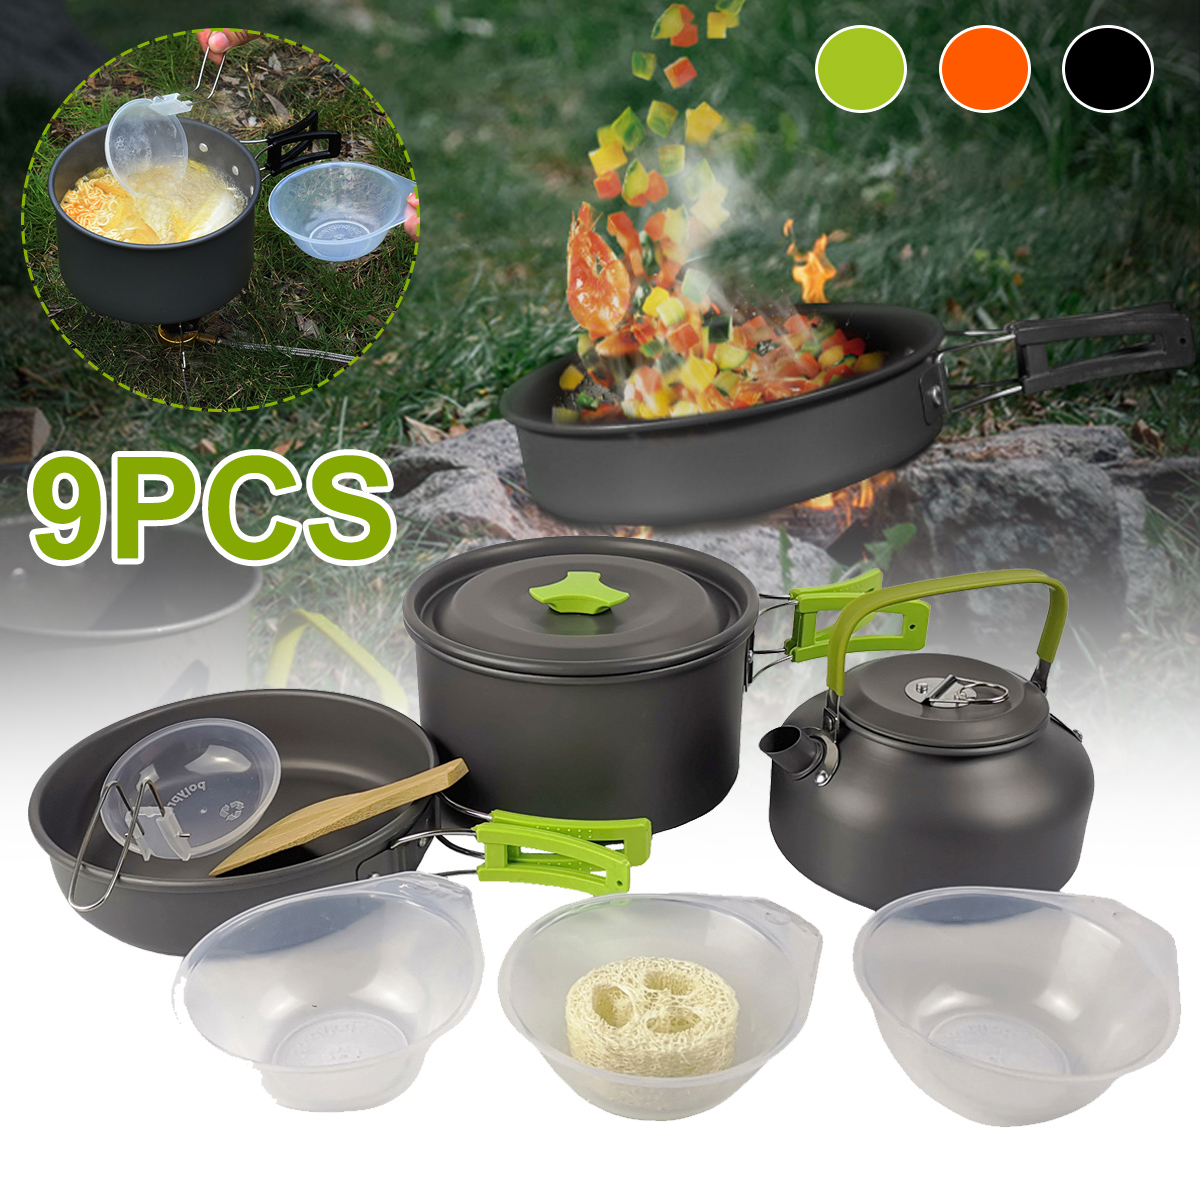 9PCS-Aluminum-Alloy-Camping-Pot-Cookware-Pans-Kettle-Set-Portable-Outdoor-Camping-Cookware-1888230-1